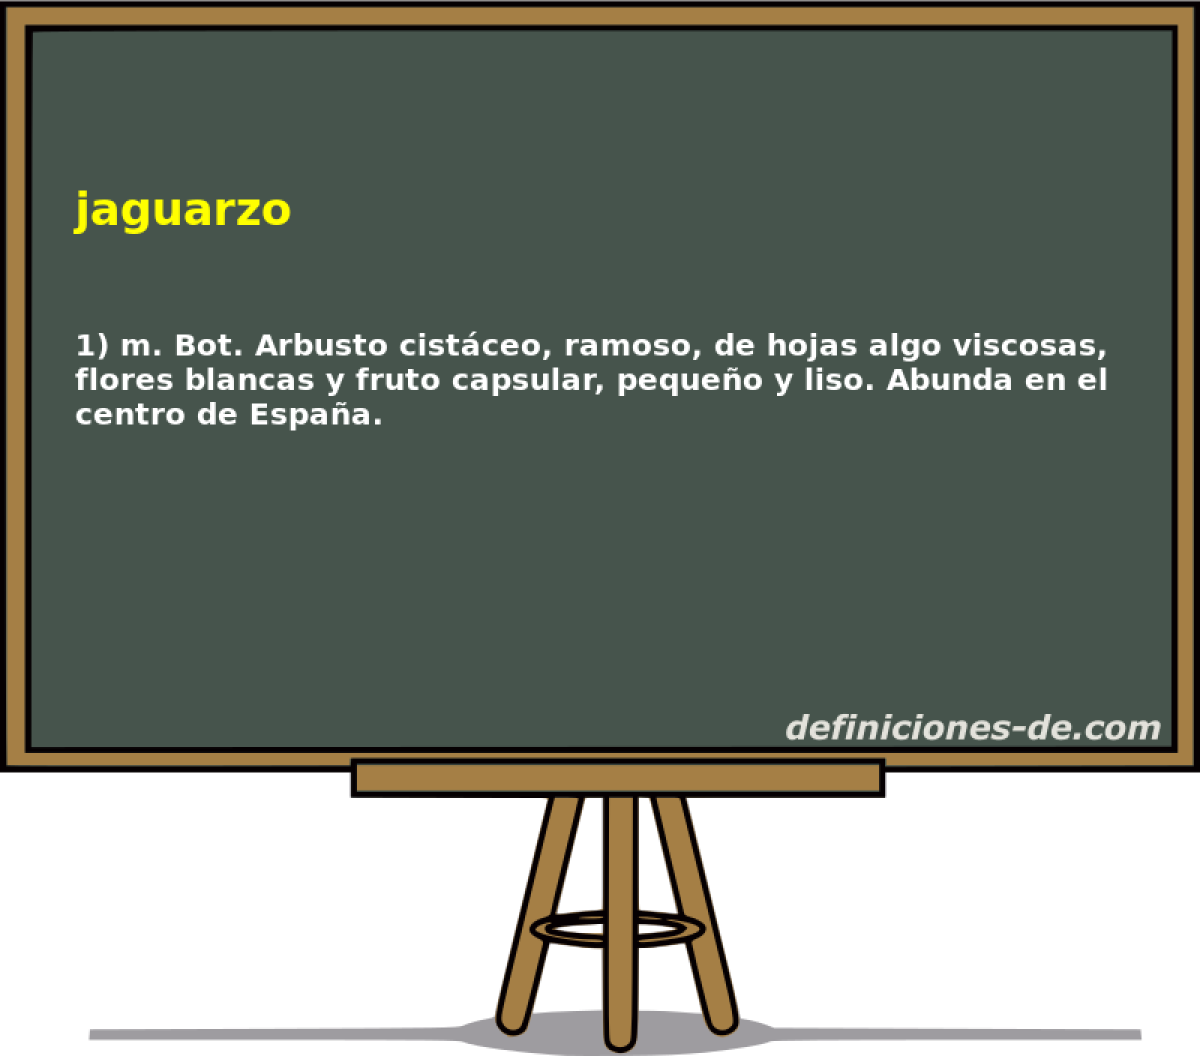 jaguarzo 